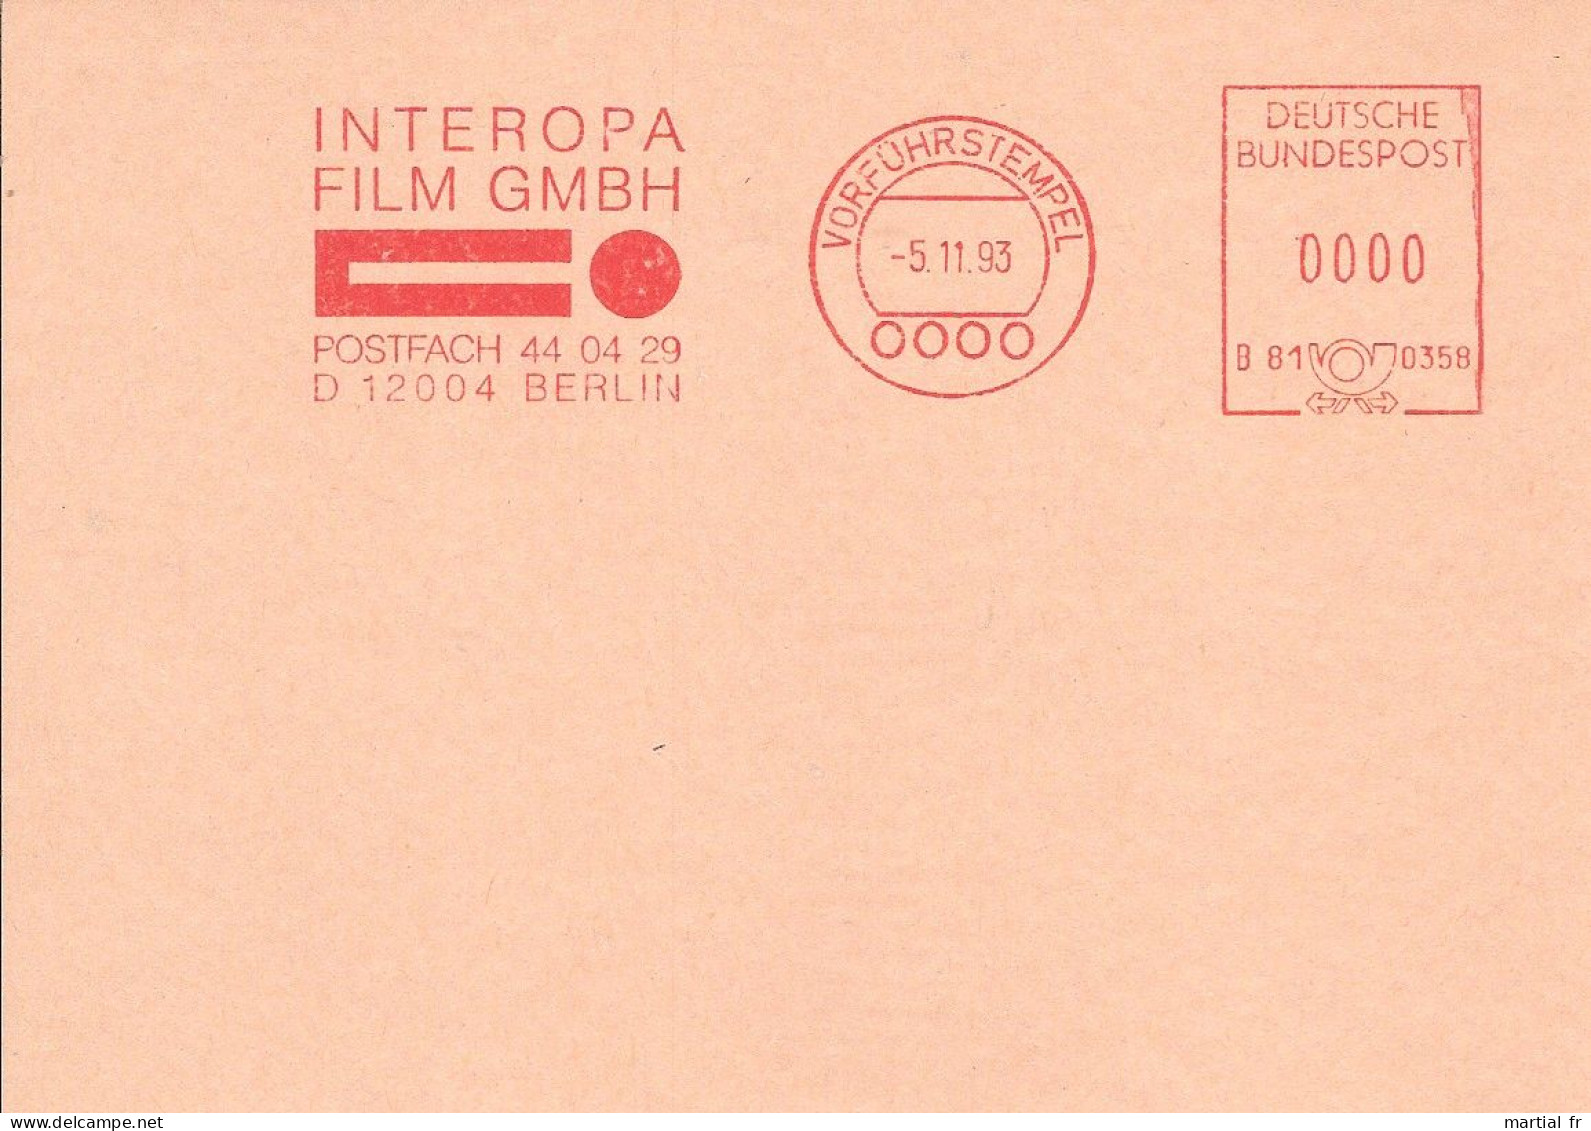 EMA ALLEMAGNE SPECIMEN GERMANY PHOTOGRAPHIE PHOTO FOTO FOTOGRAFIE FILM CINEMA KINO INTEROPA BERLIN - Cinema